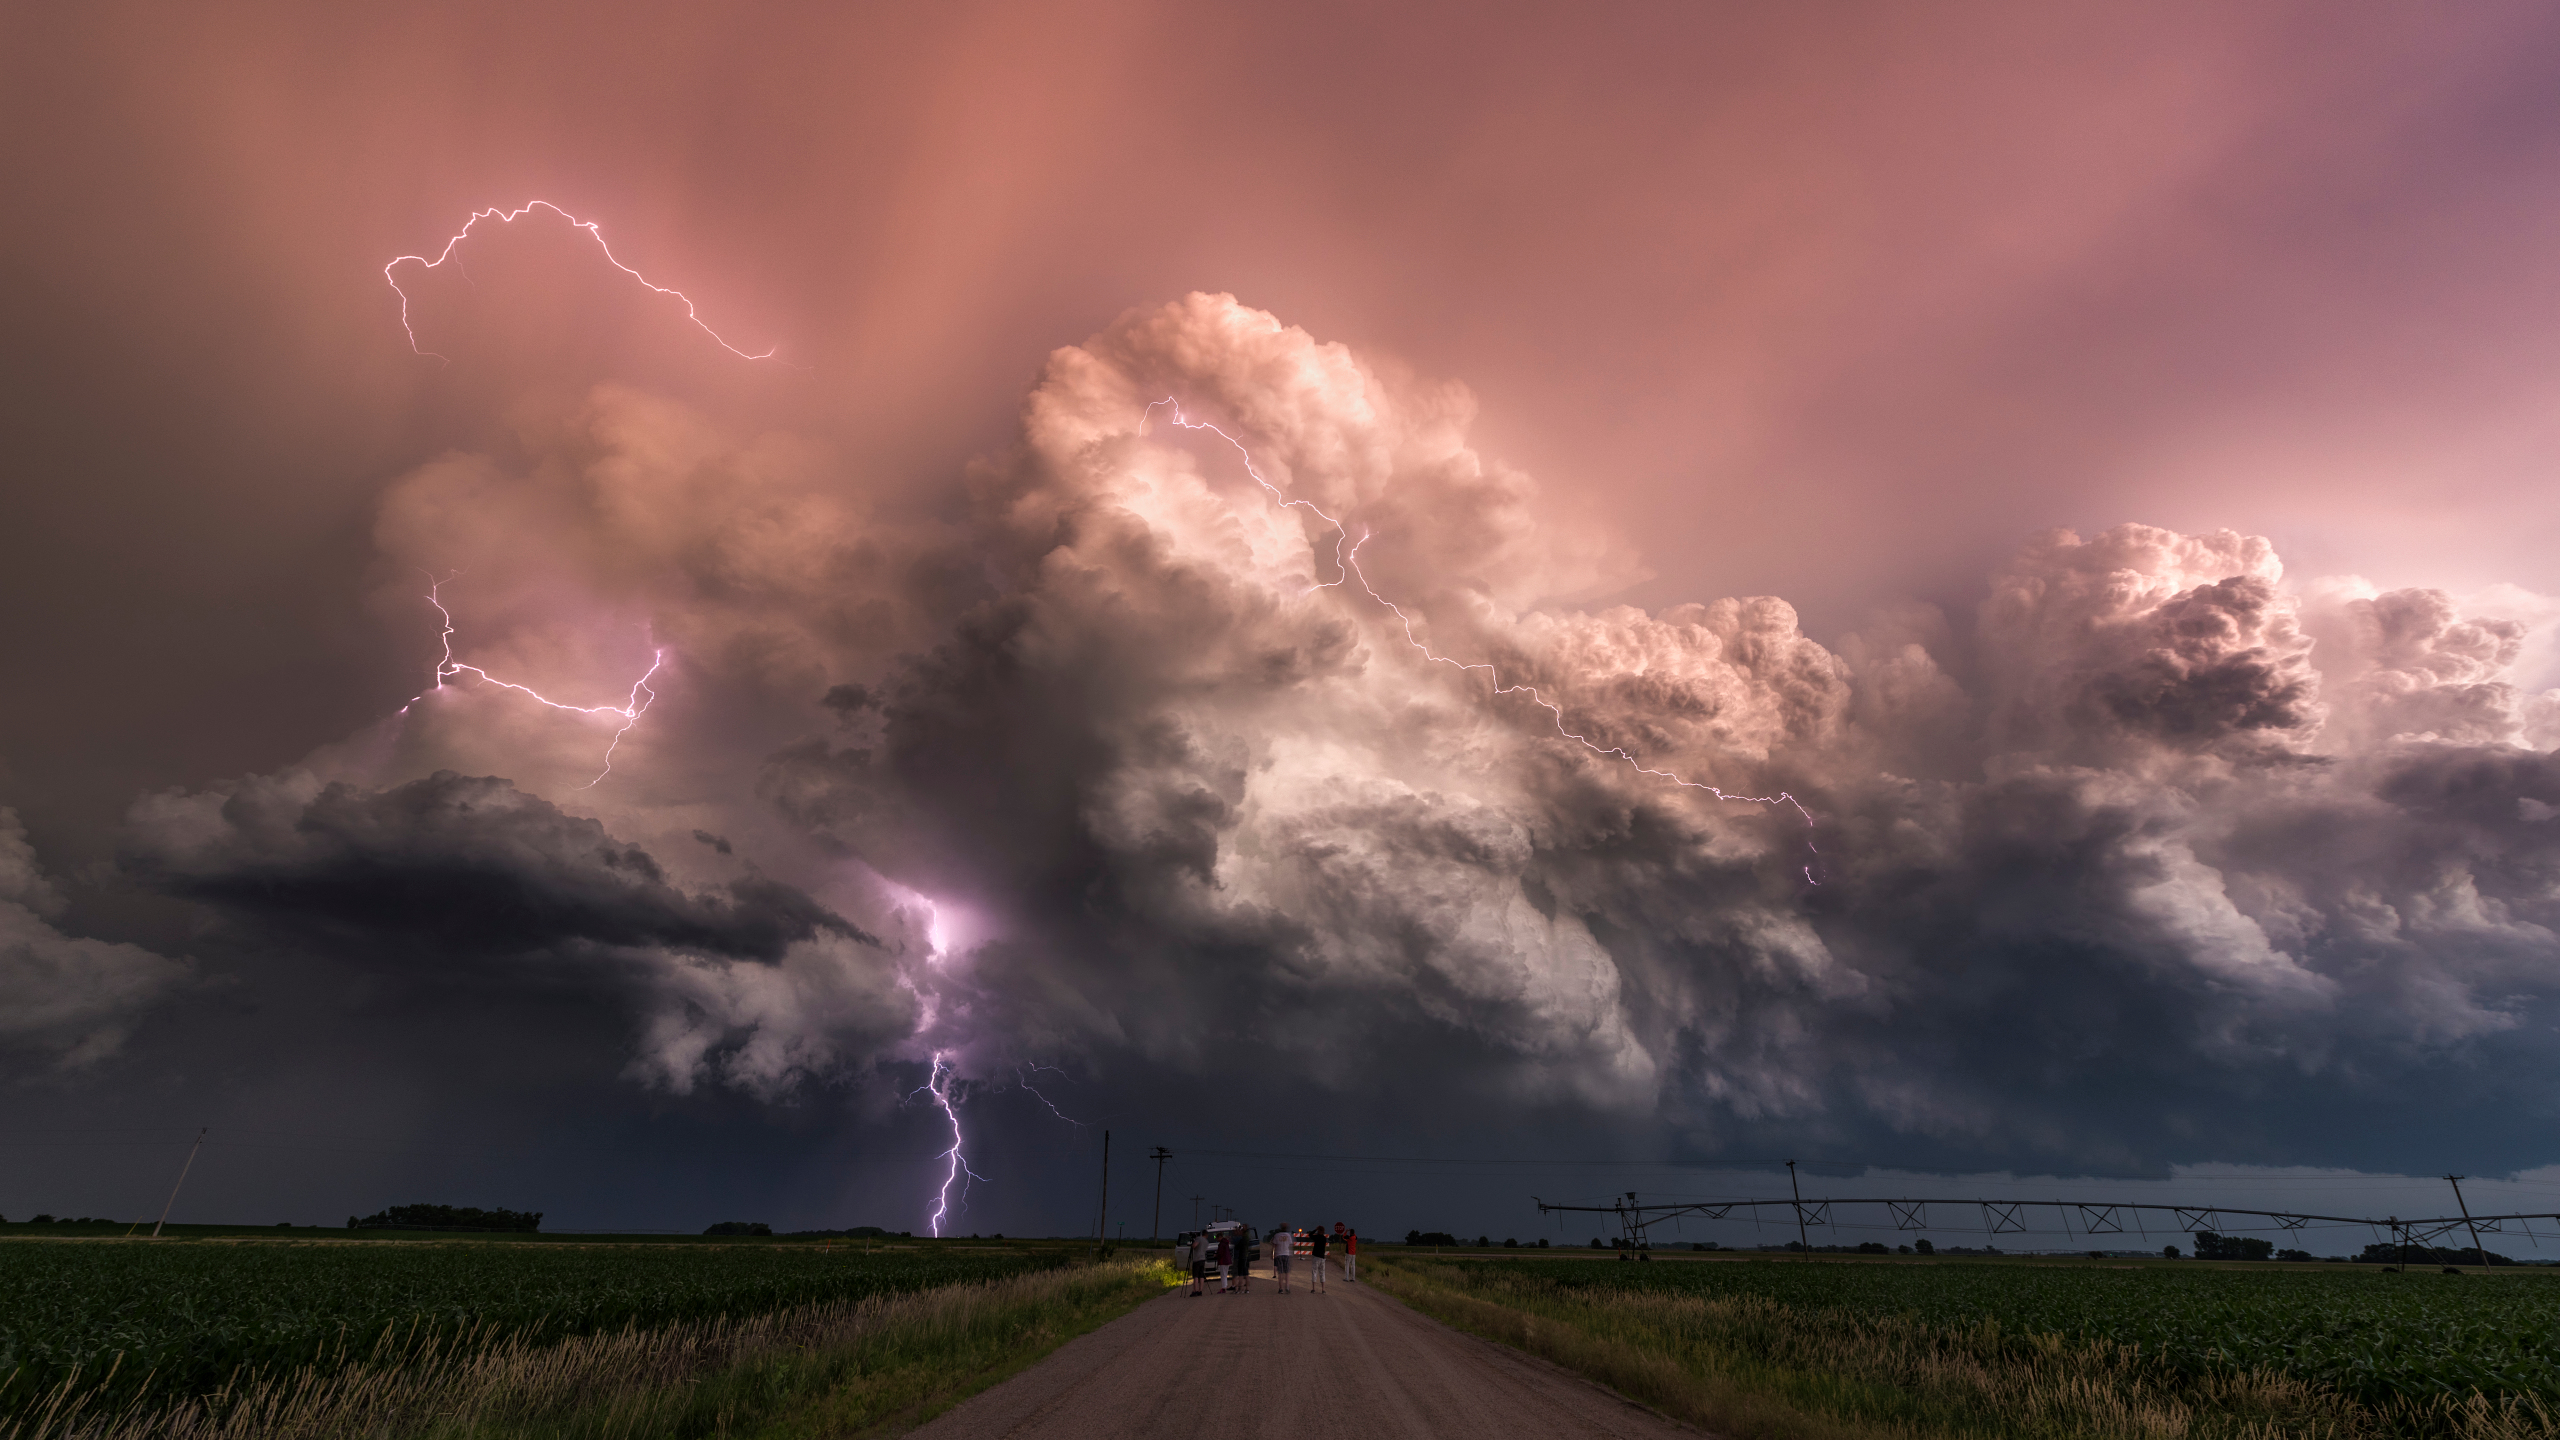 General 2560x1440 storm nature clouds lightning sky long exposure timelapse dirt road field